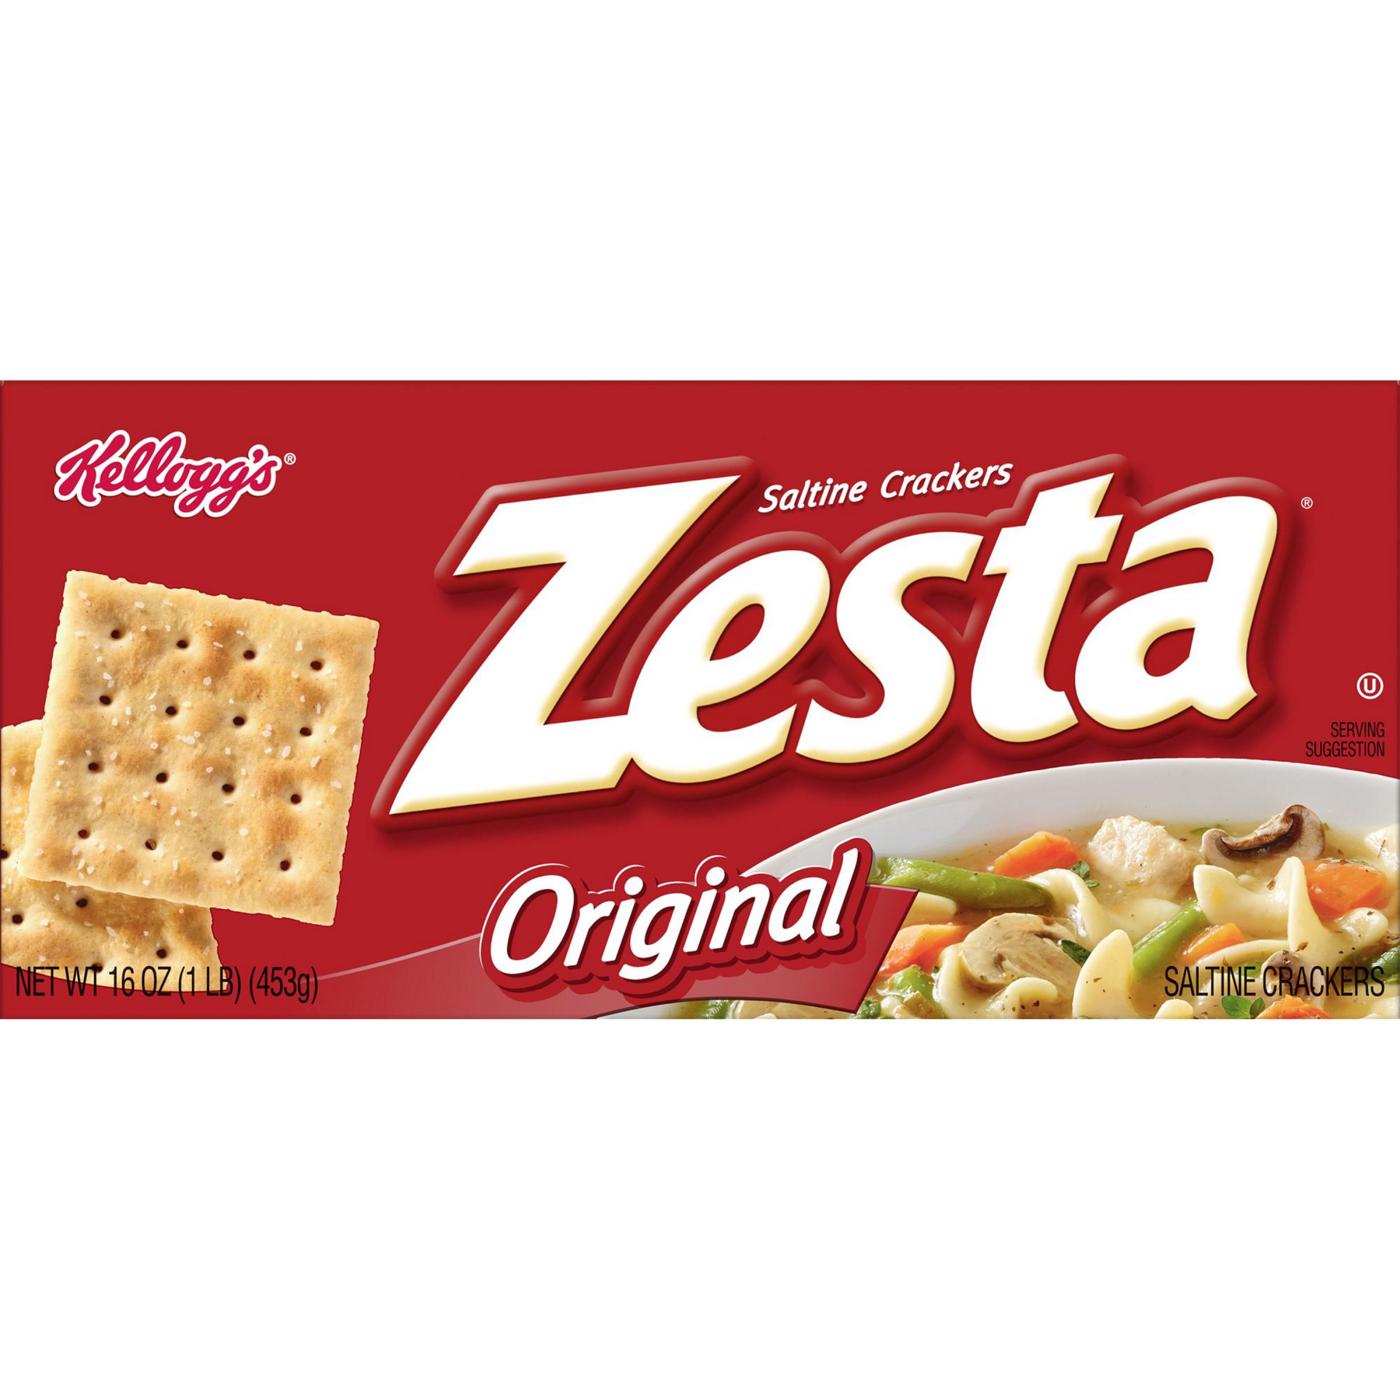 Kellogg's Zesta Original Saltine Crackers; image 4 of 5